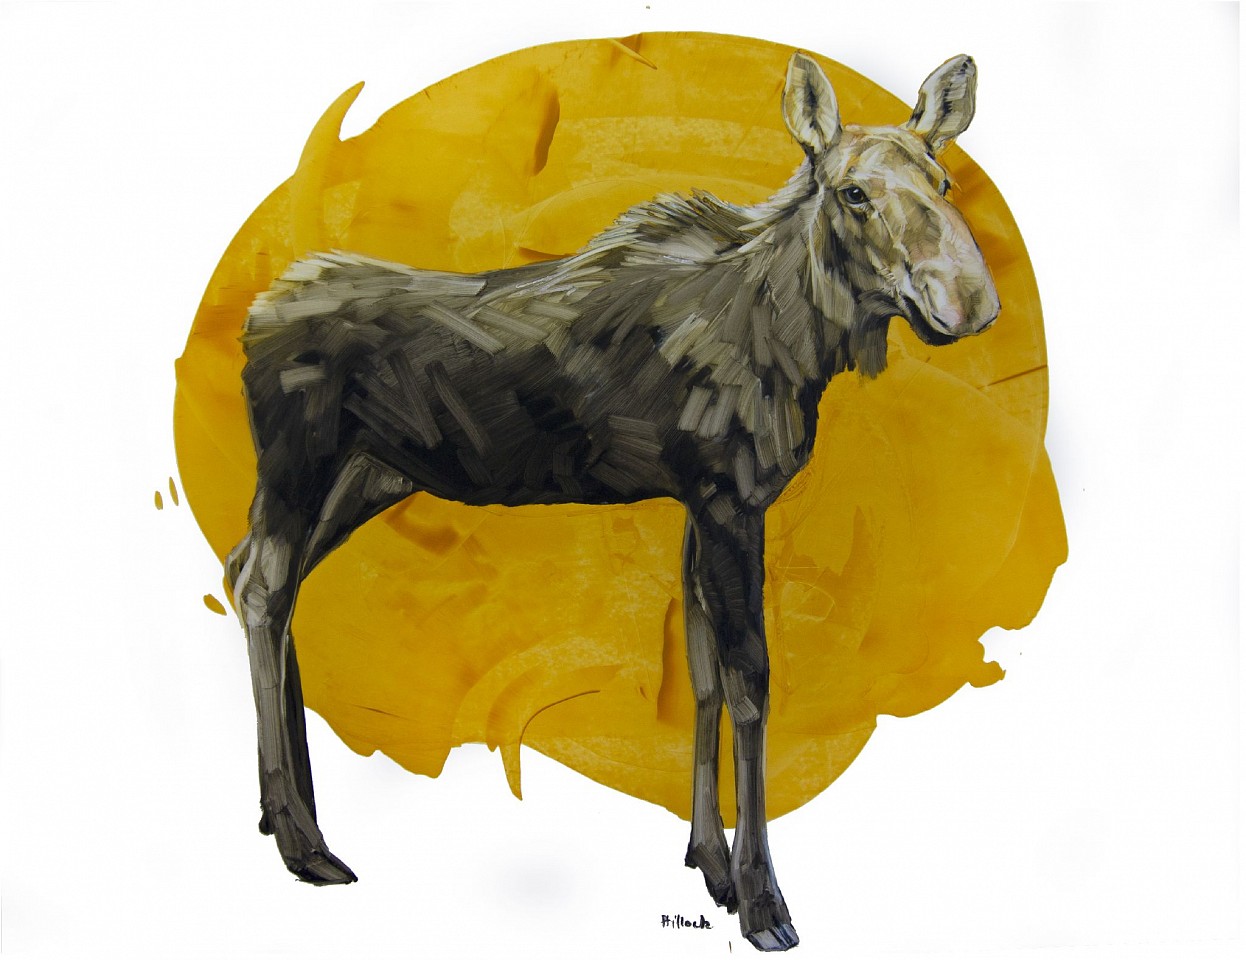 Sarah Hillock, Teddy
Oil on Mylar, 42 x 54 in. (106.7 x 137.2 cm)
SOLD
07794
&bull;